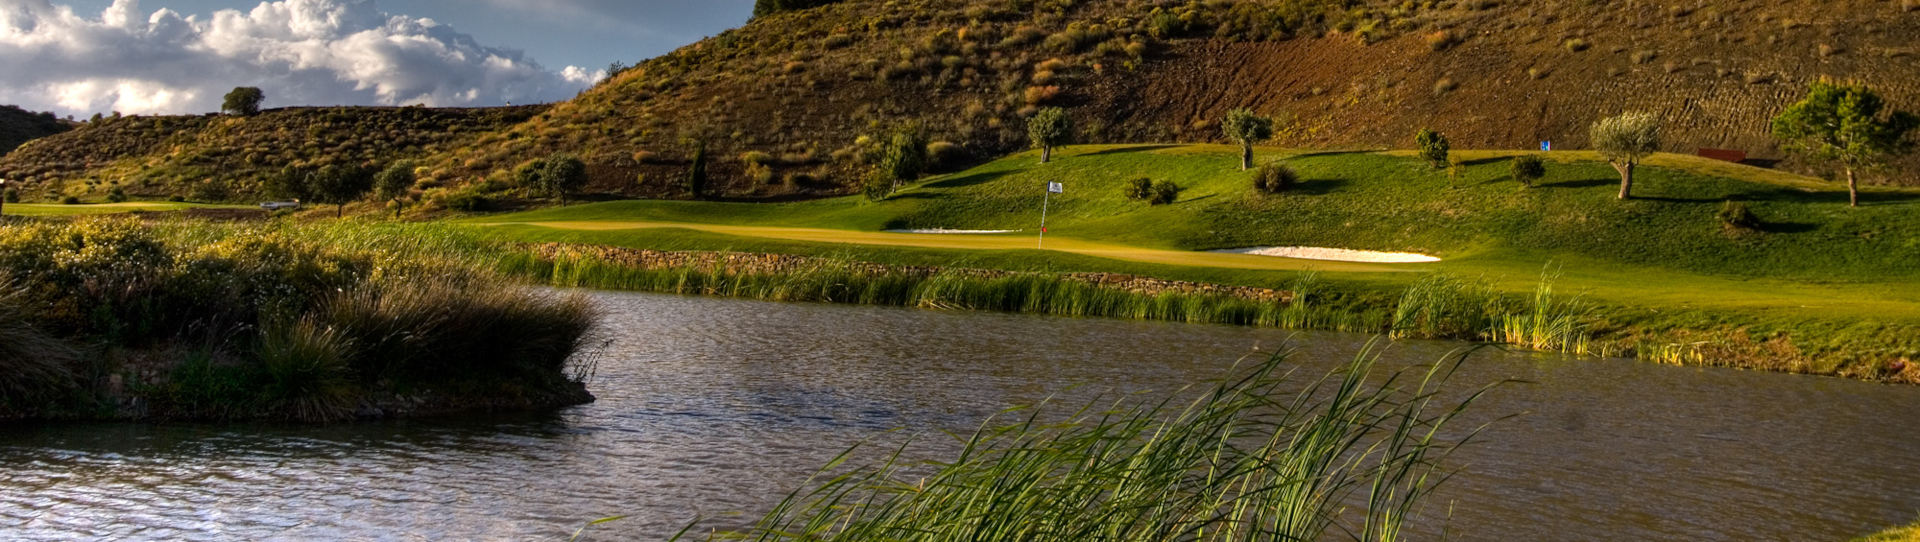 Portugal golf courses - Quinta do Vale Golf Course - Photo 3